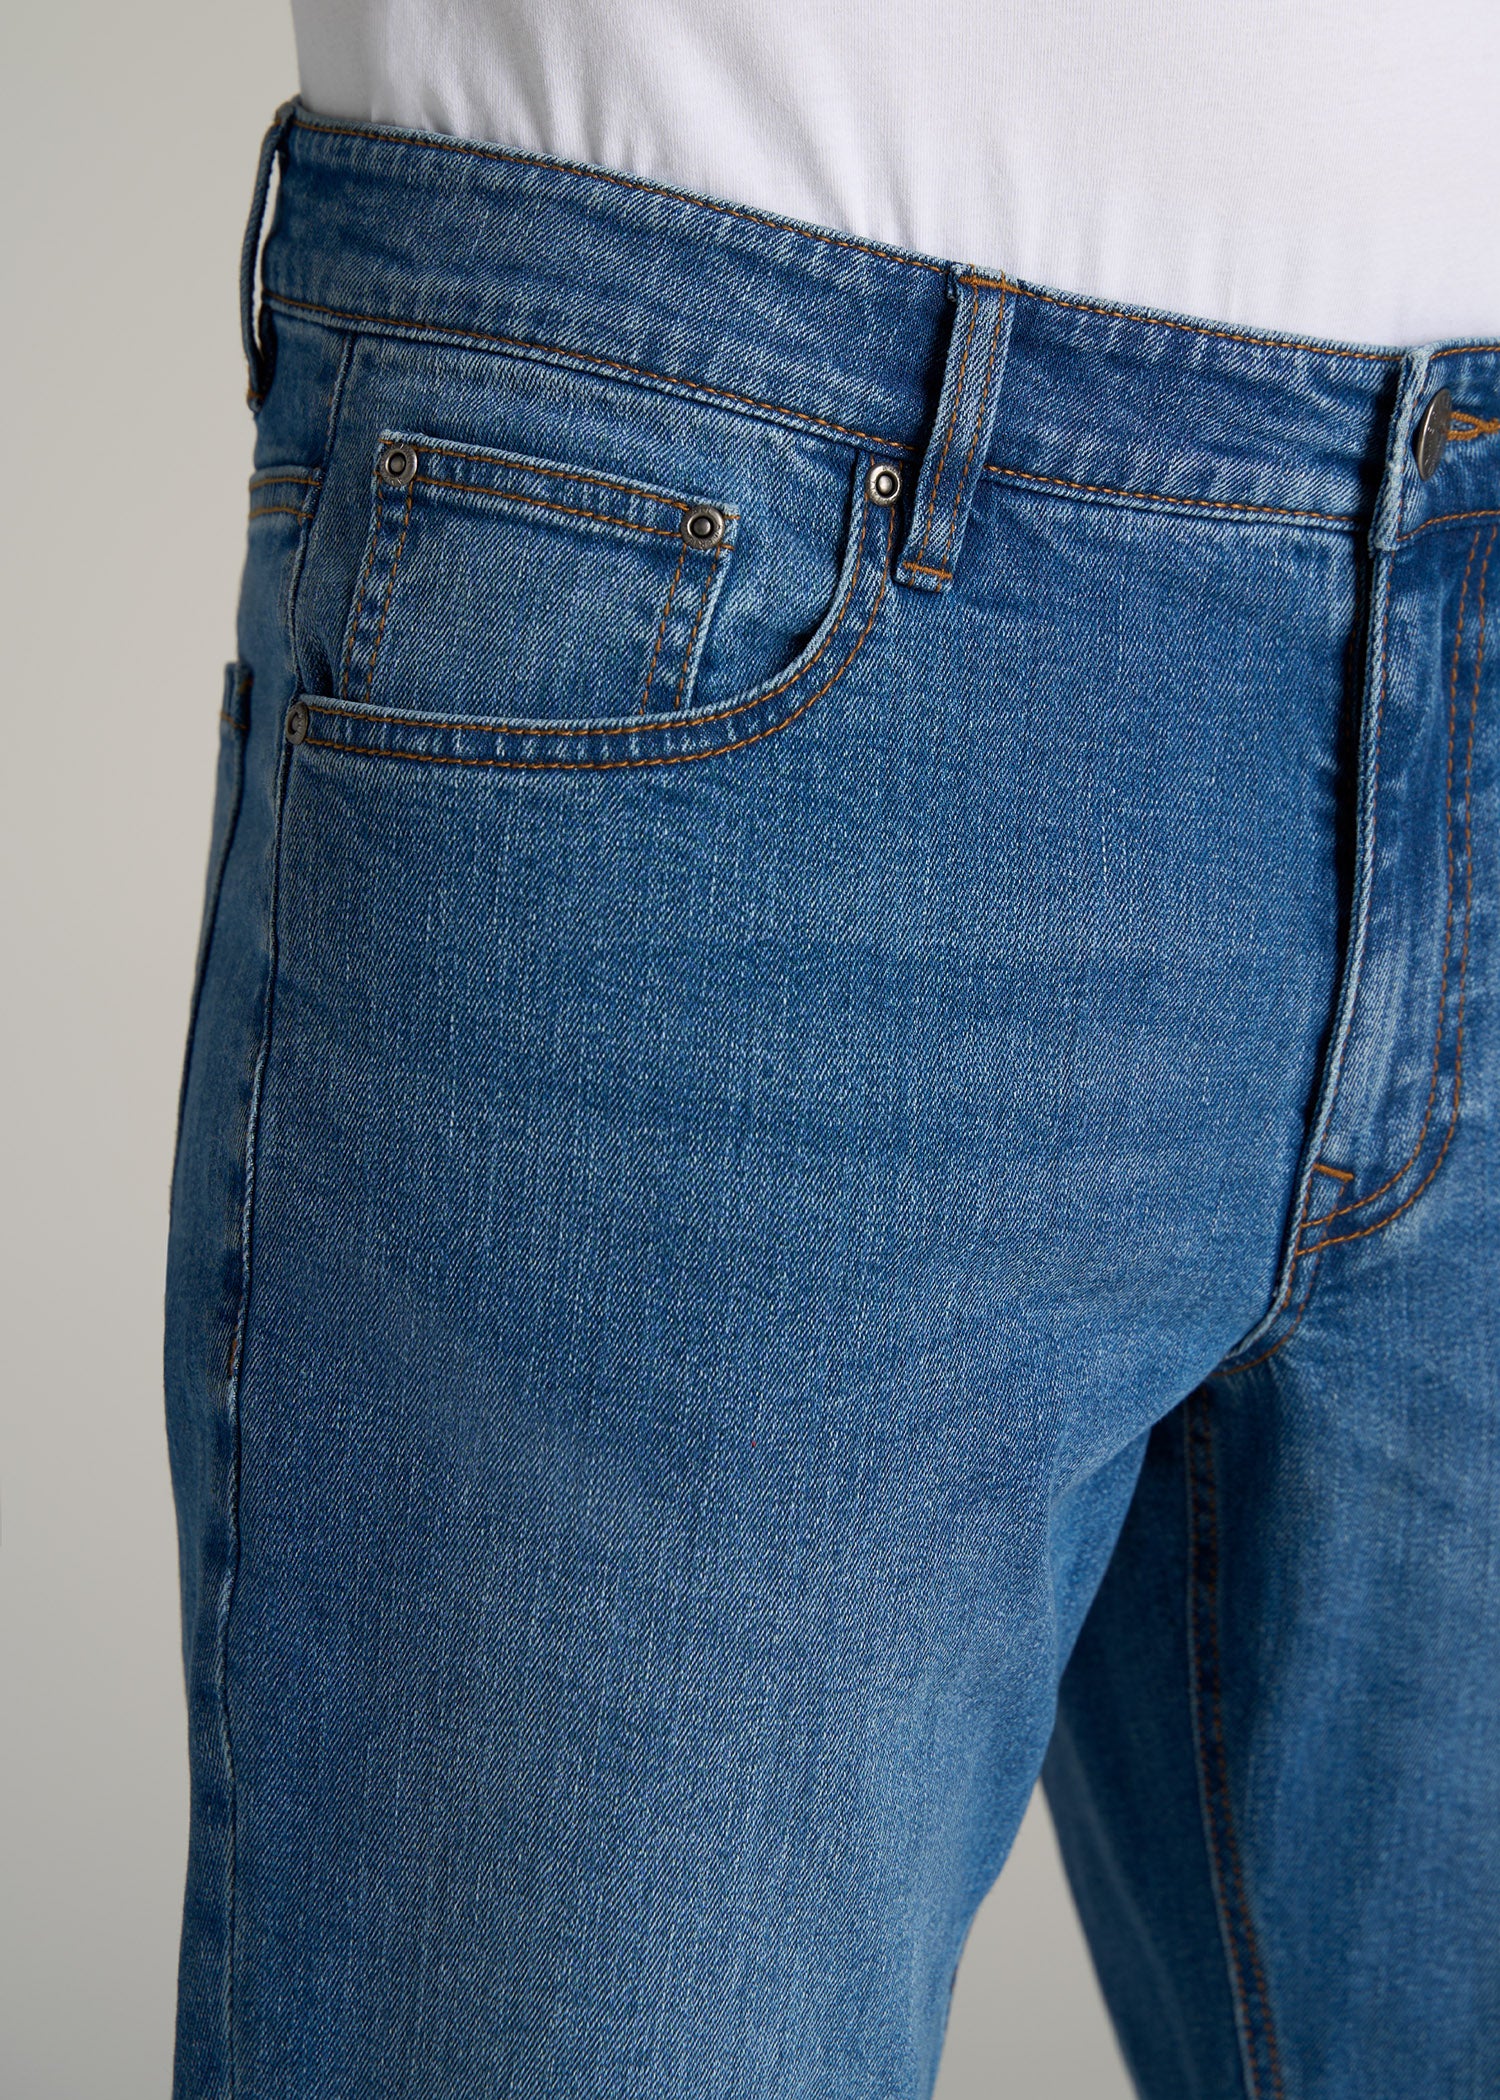    American-Tall-Men-Carman-Tapered-Fit-Jeans-Classic-Mid-Blue-pocket